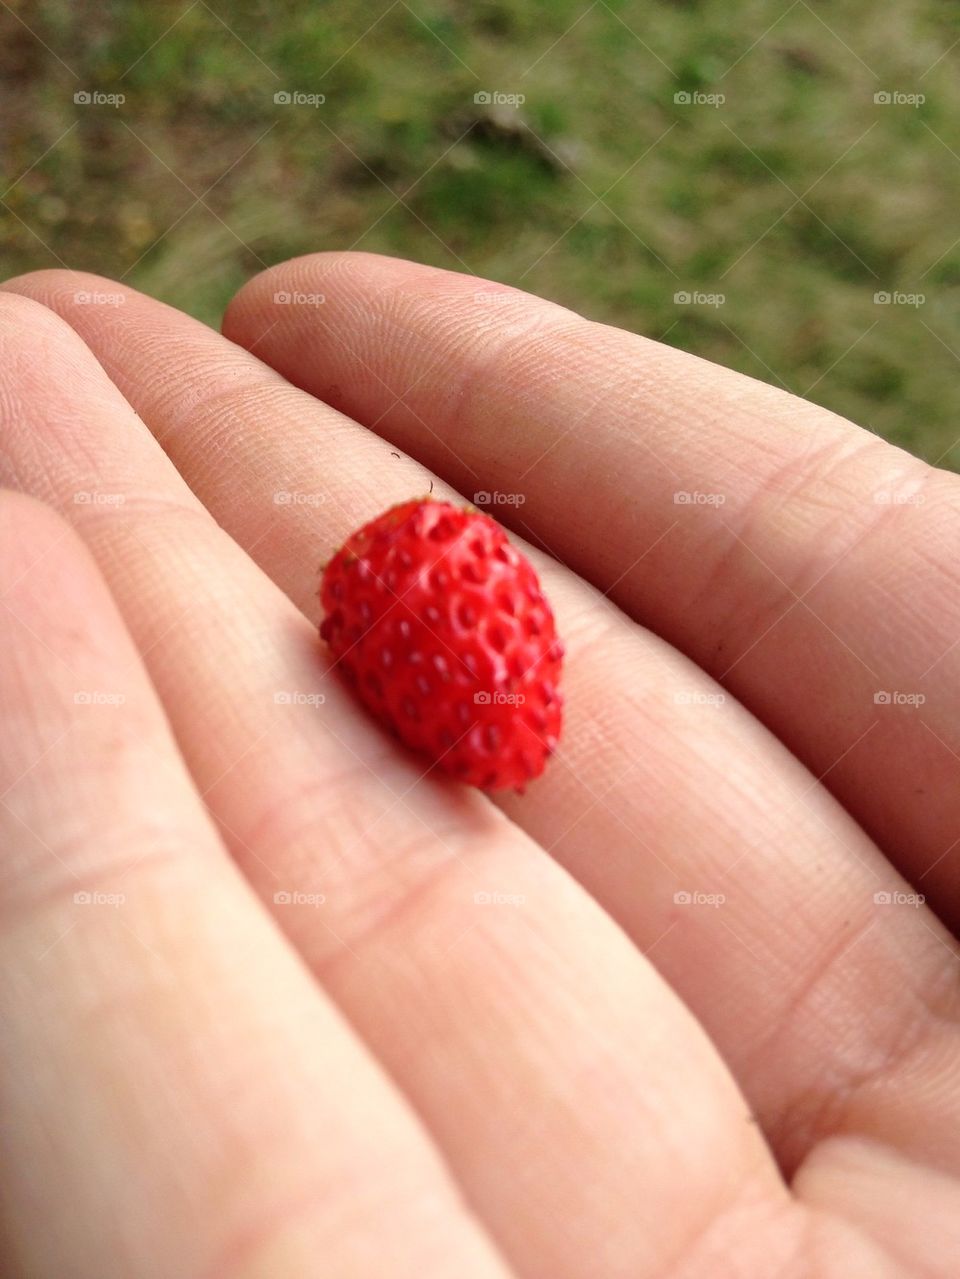 Forrest strawberry